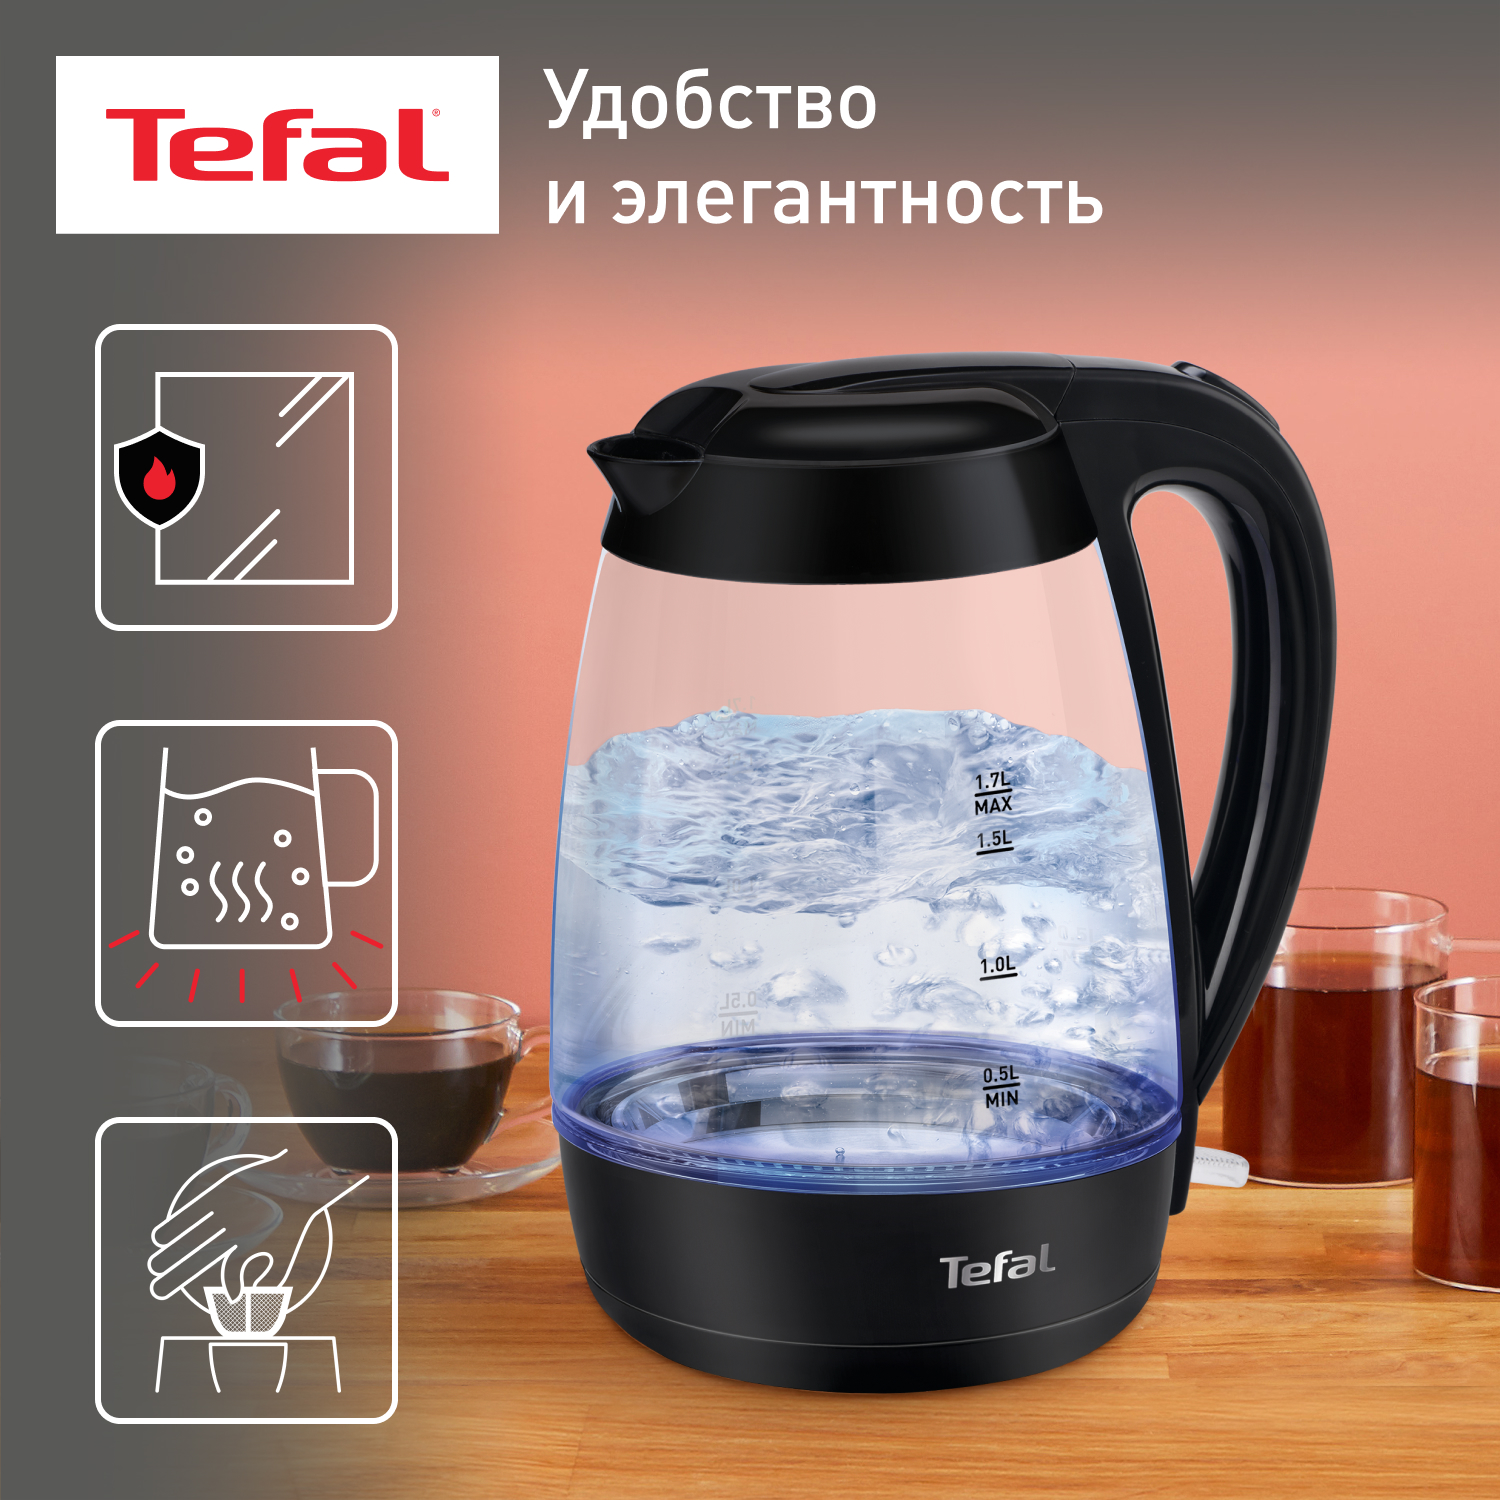 Чайник электрический Tefal Glass KO450832, 1.7 л, черный чайник электрический tefal glass kettle ki750d30 1 7 л серебристый